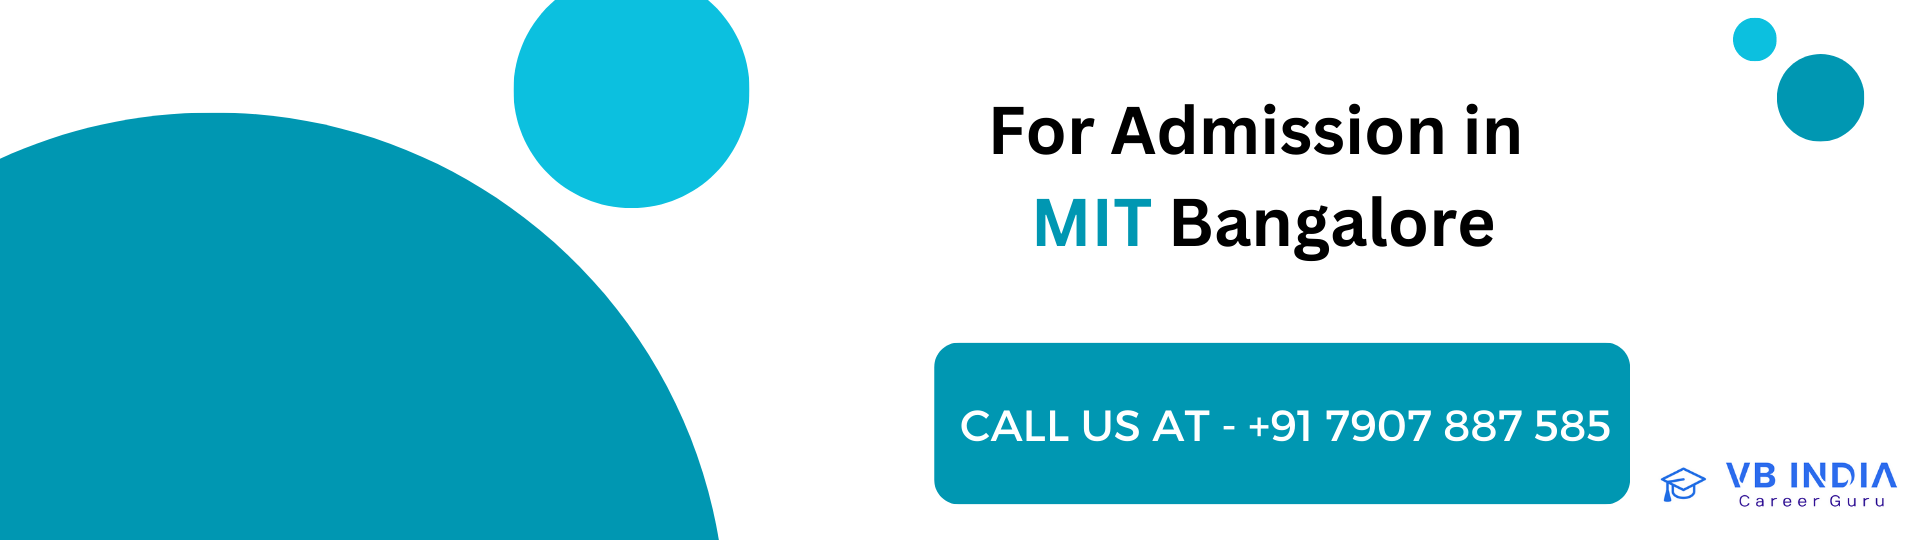 MIT-admissions